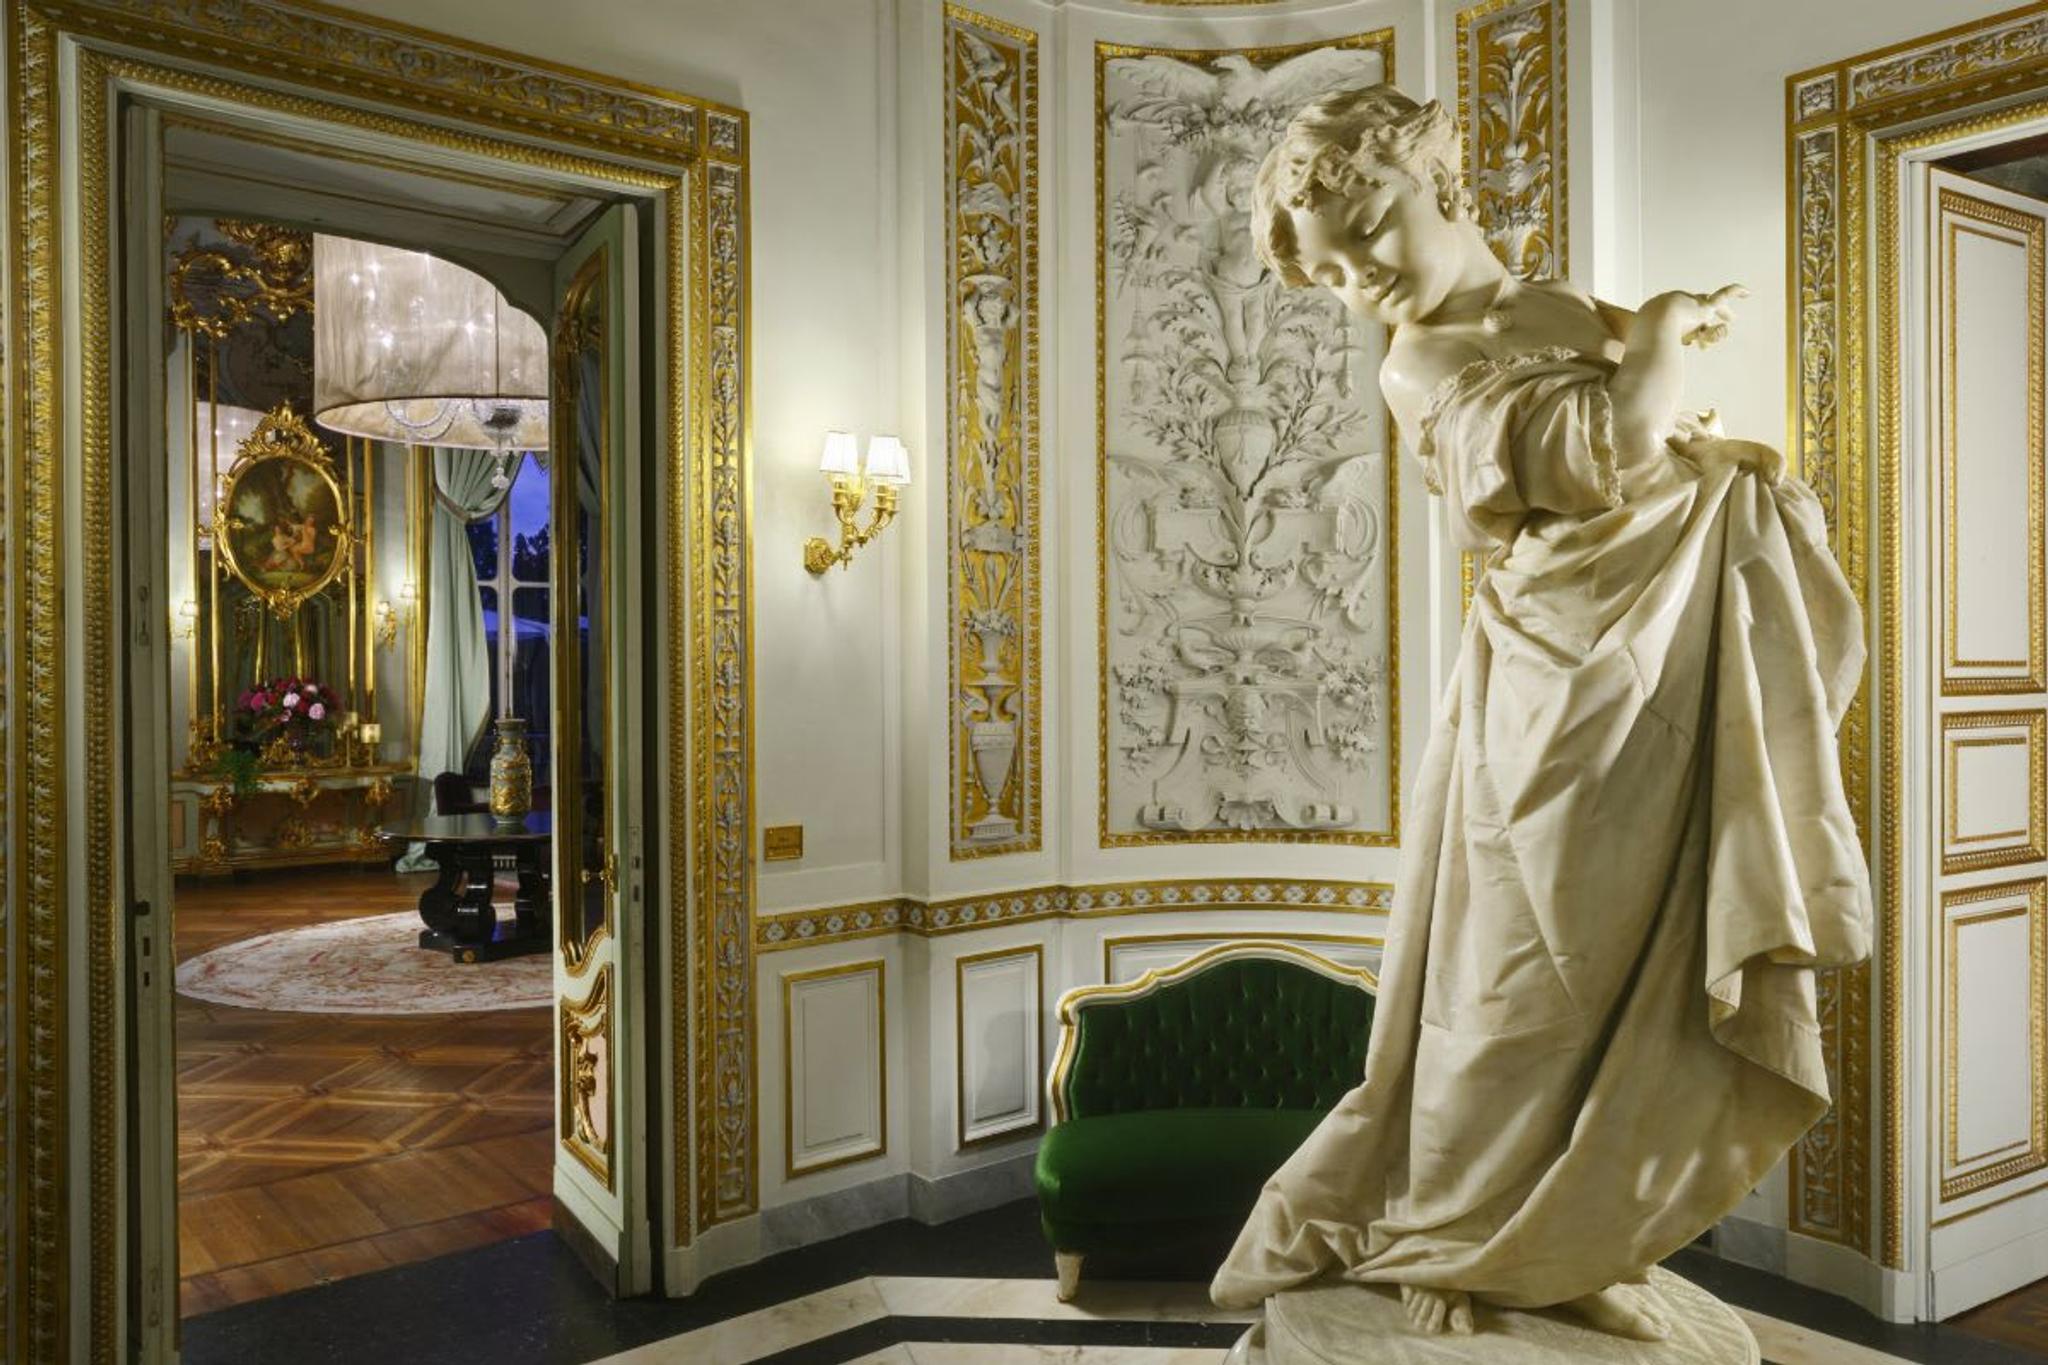 Luxurious and sumptuous details of Villa Cora interiors.